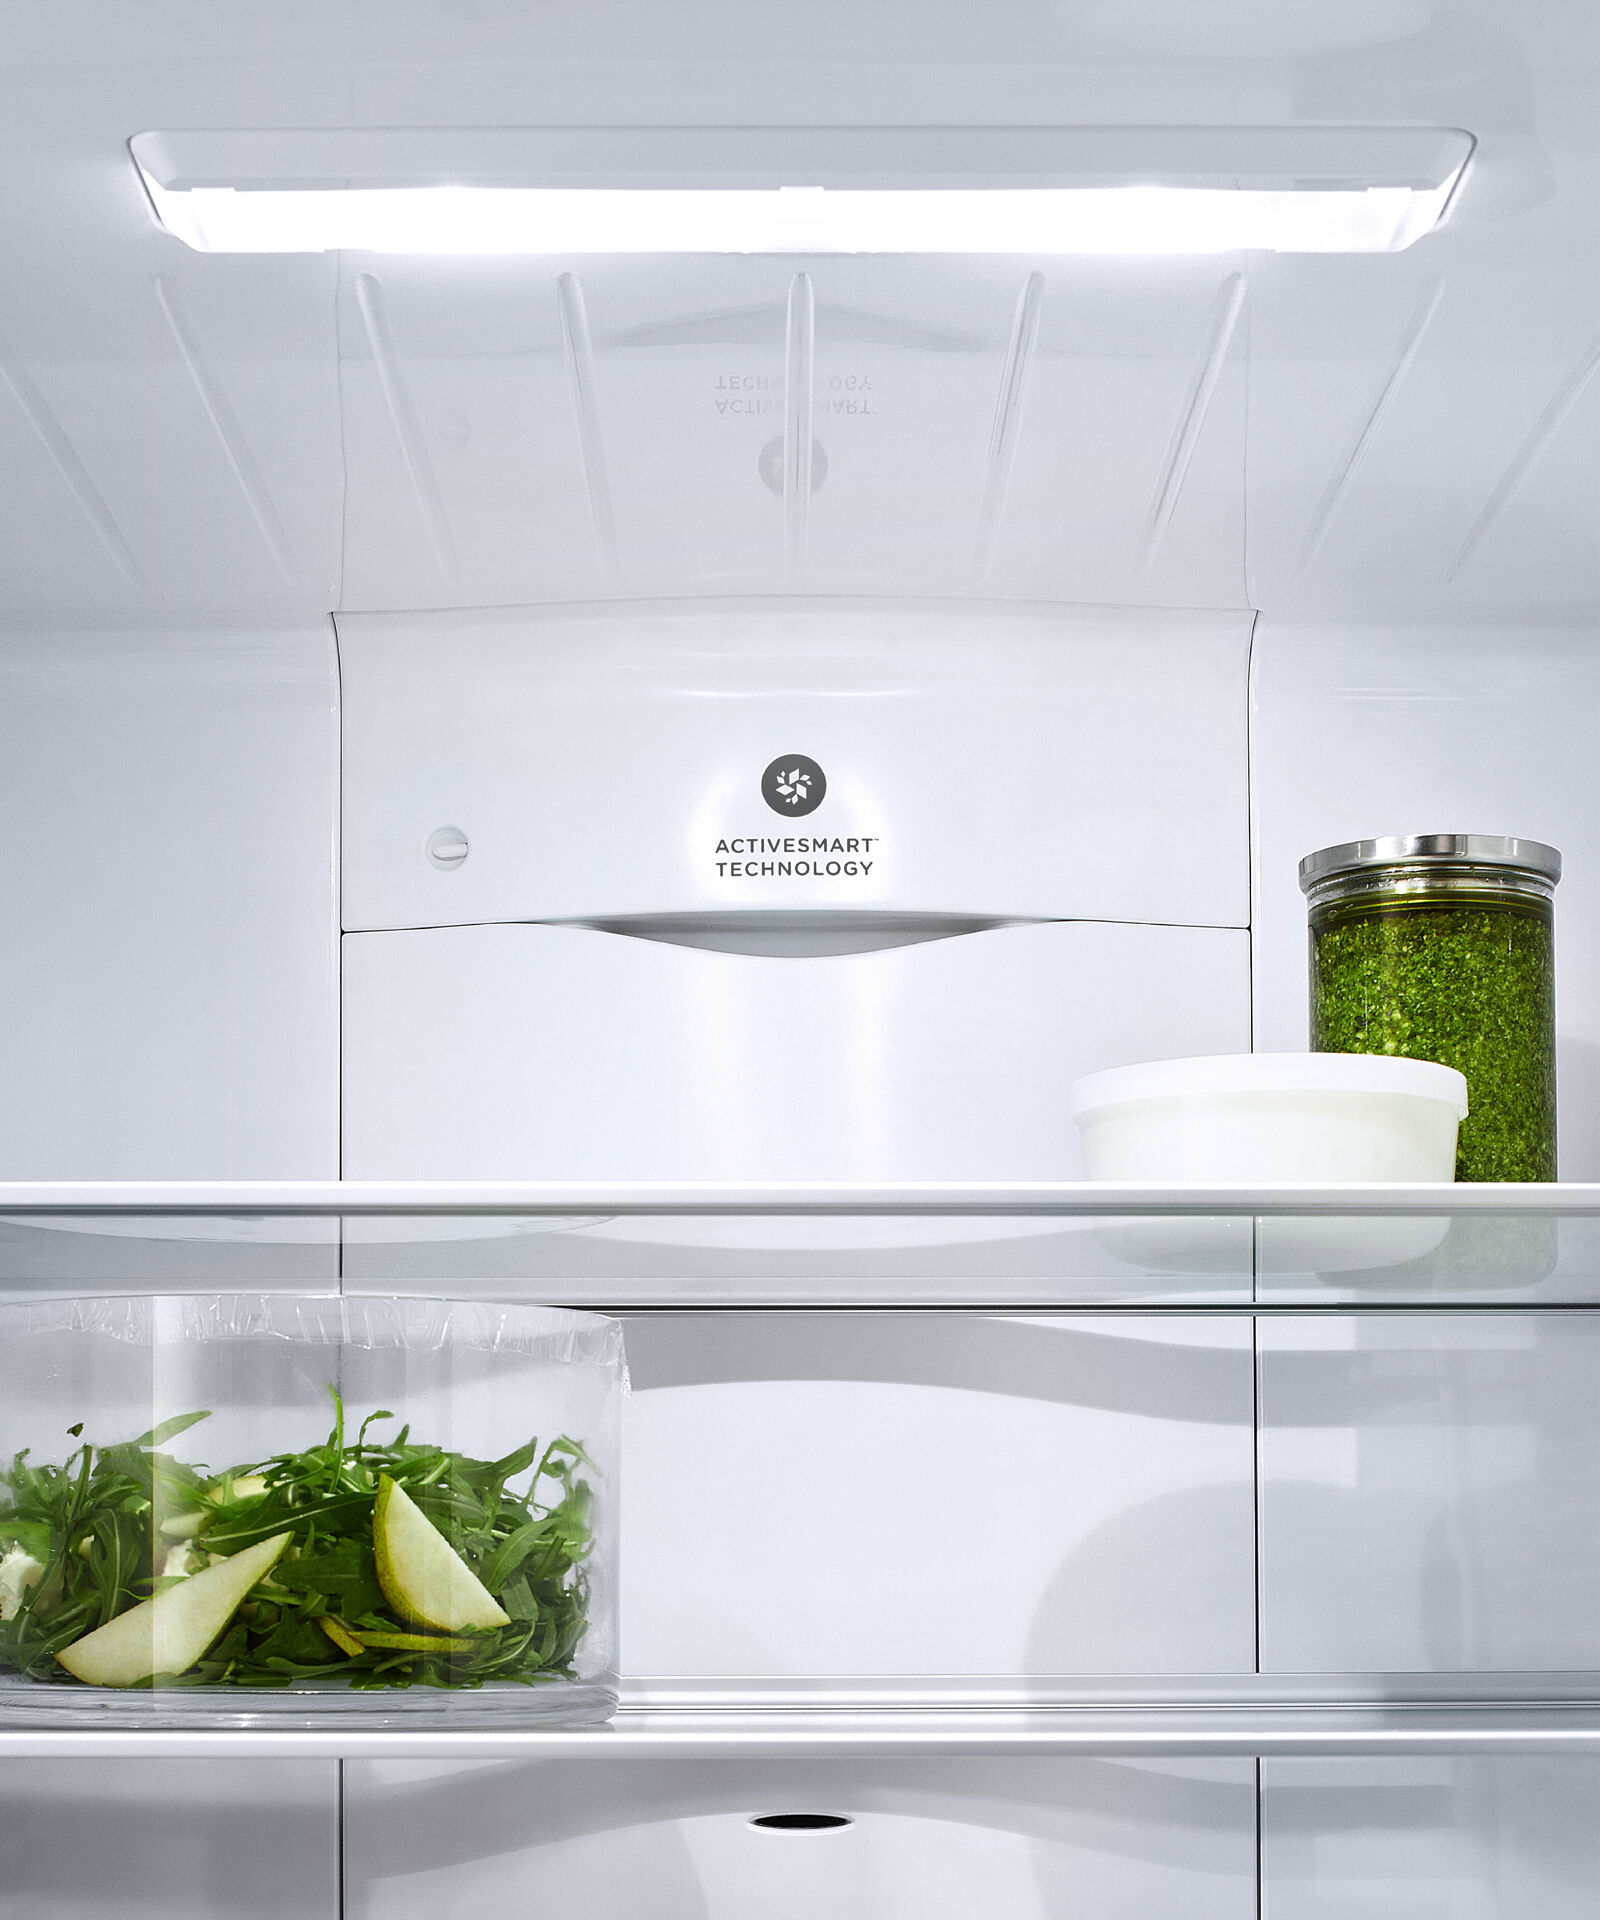 Freestanding Refrigerator Freezer, 79cm gallery image 3.0